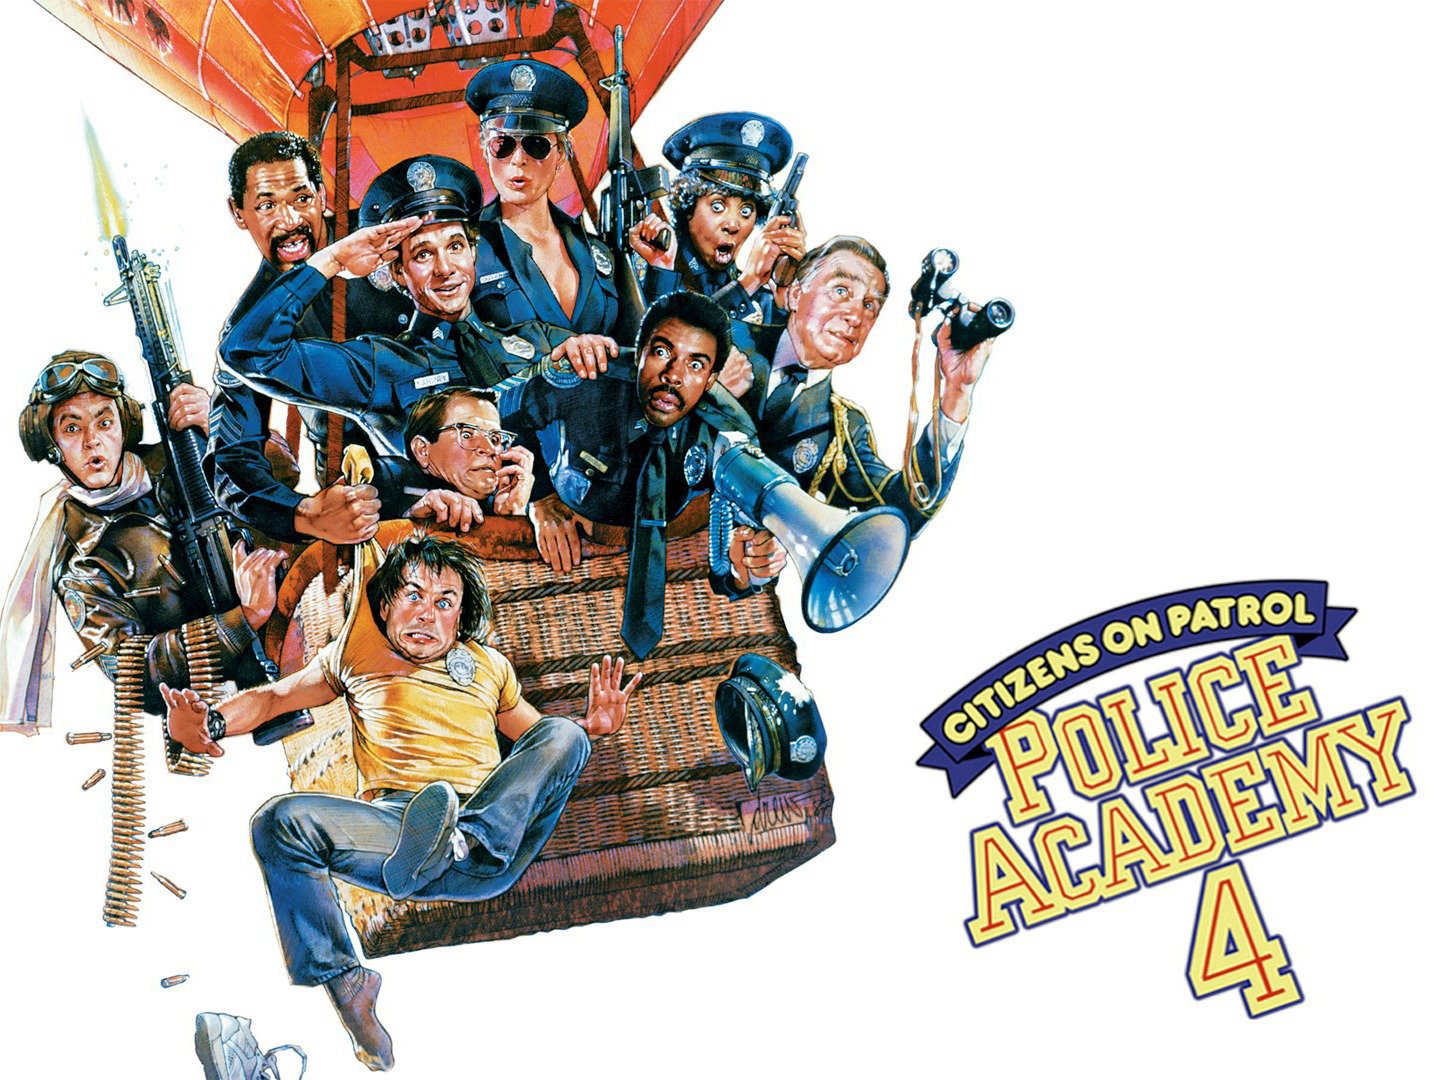 Police Academy 4: Citizens on Patrol / Police Academy 4: Citizens on Patrol (1987)